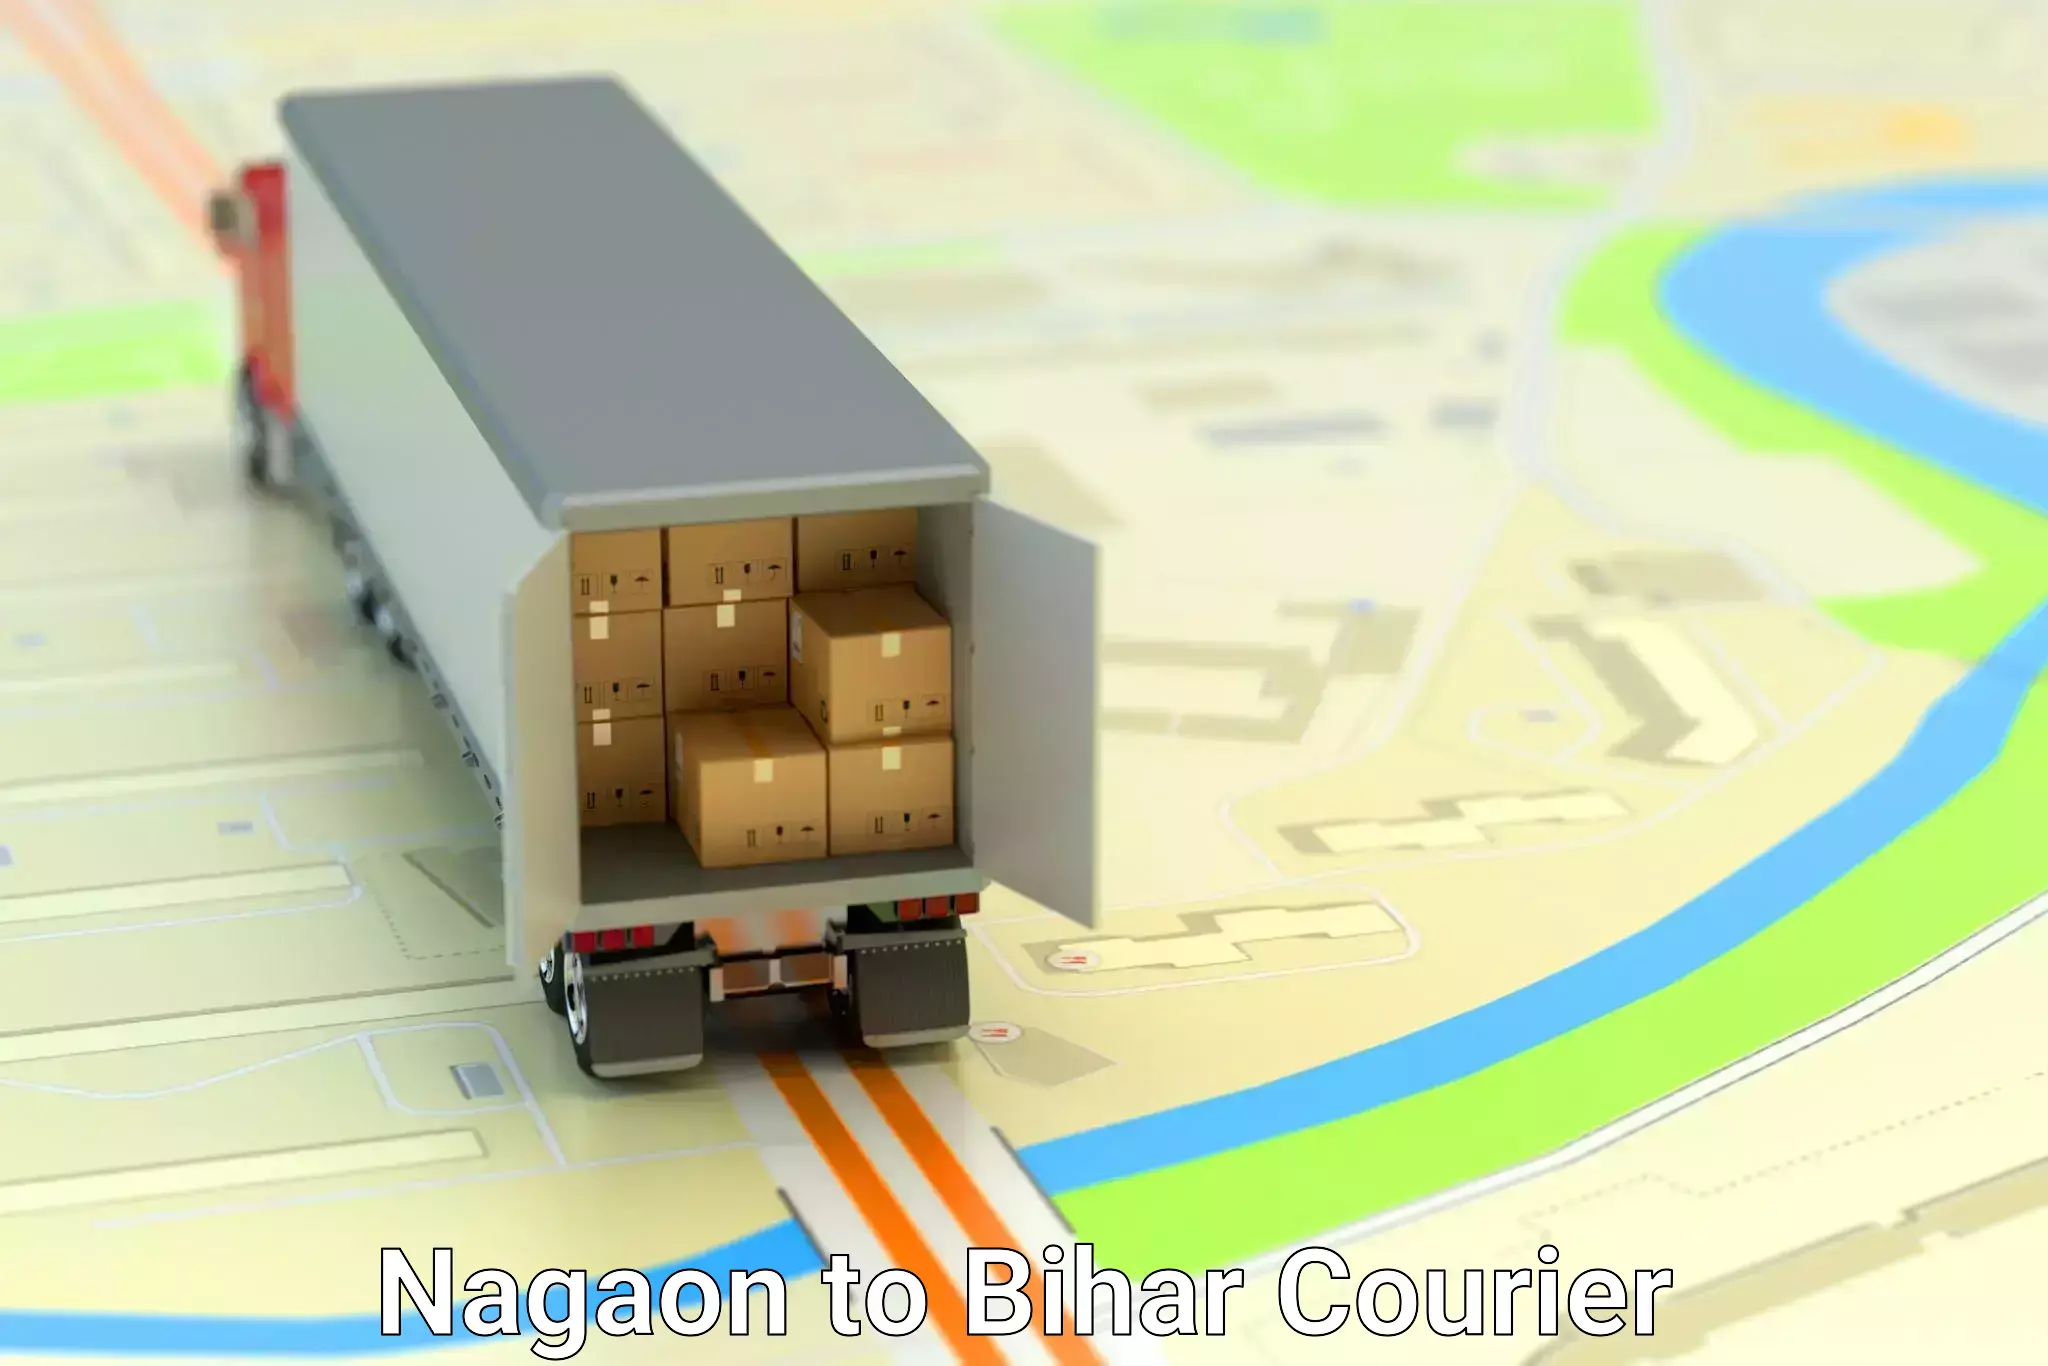 Package forwarding in Nagaon to Biraul